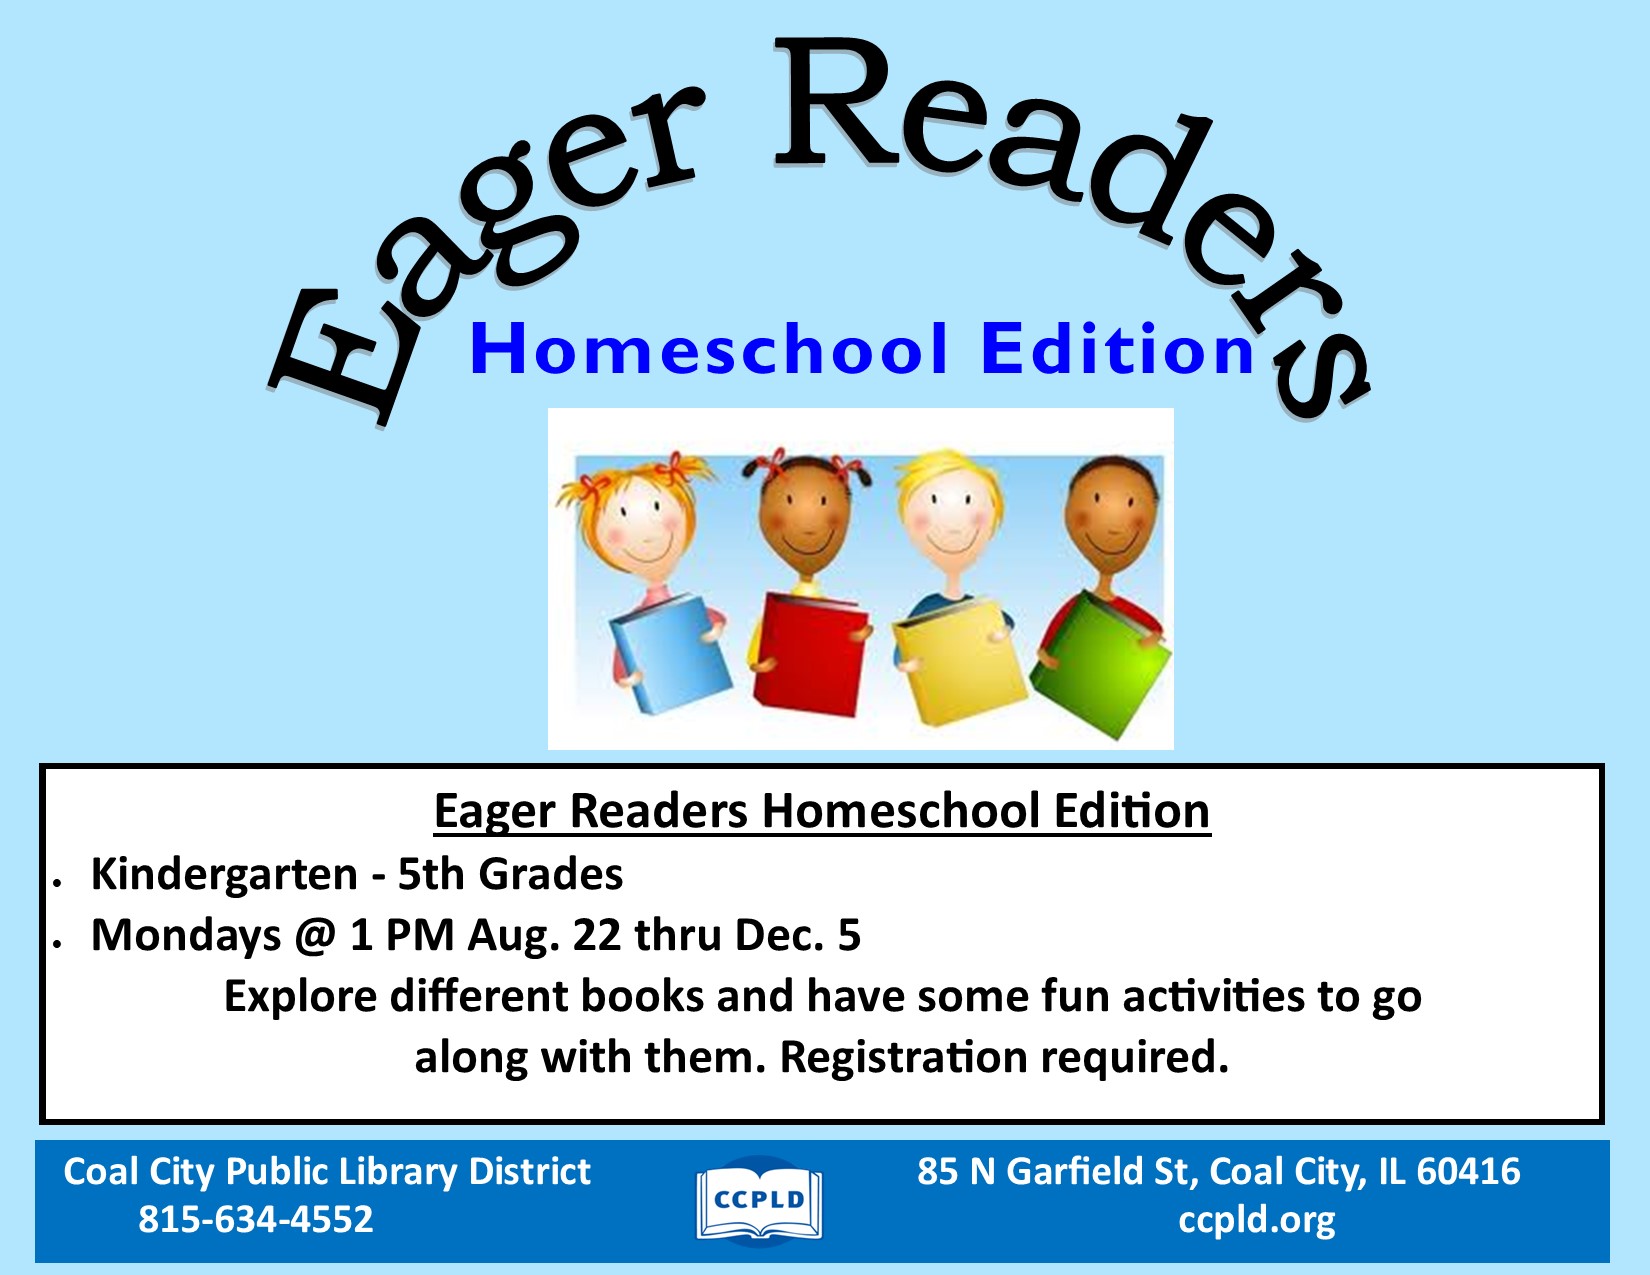 Eager Readers Homeschool Edition